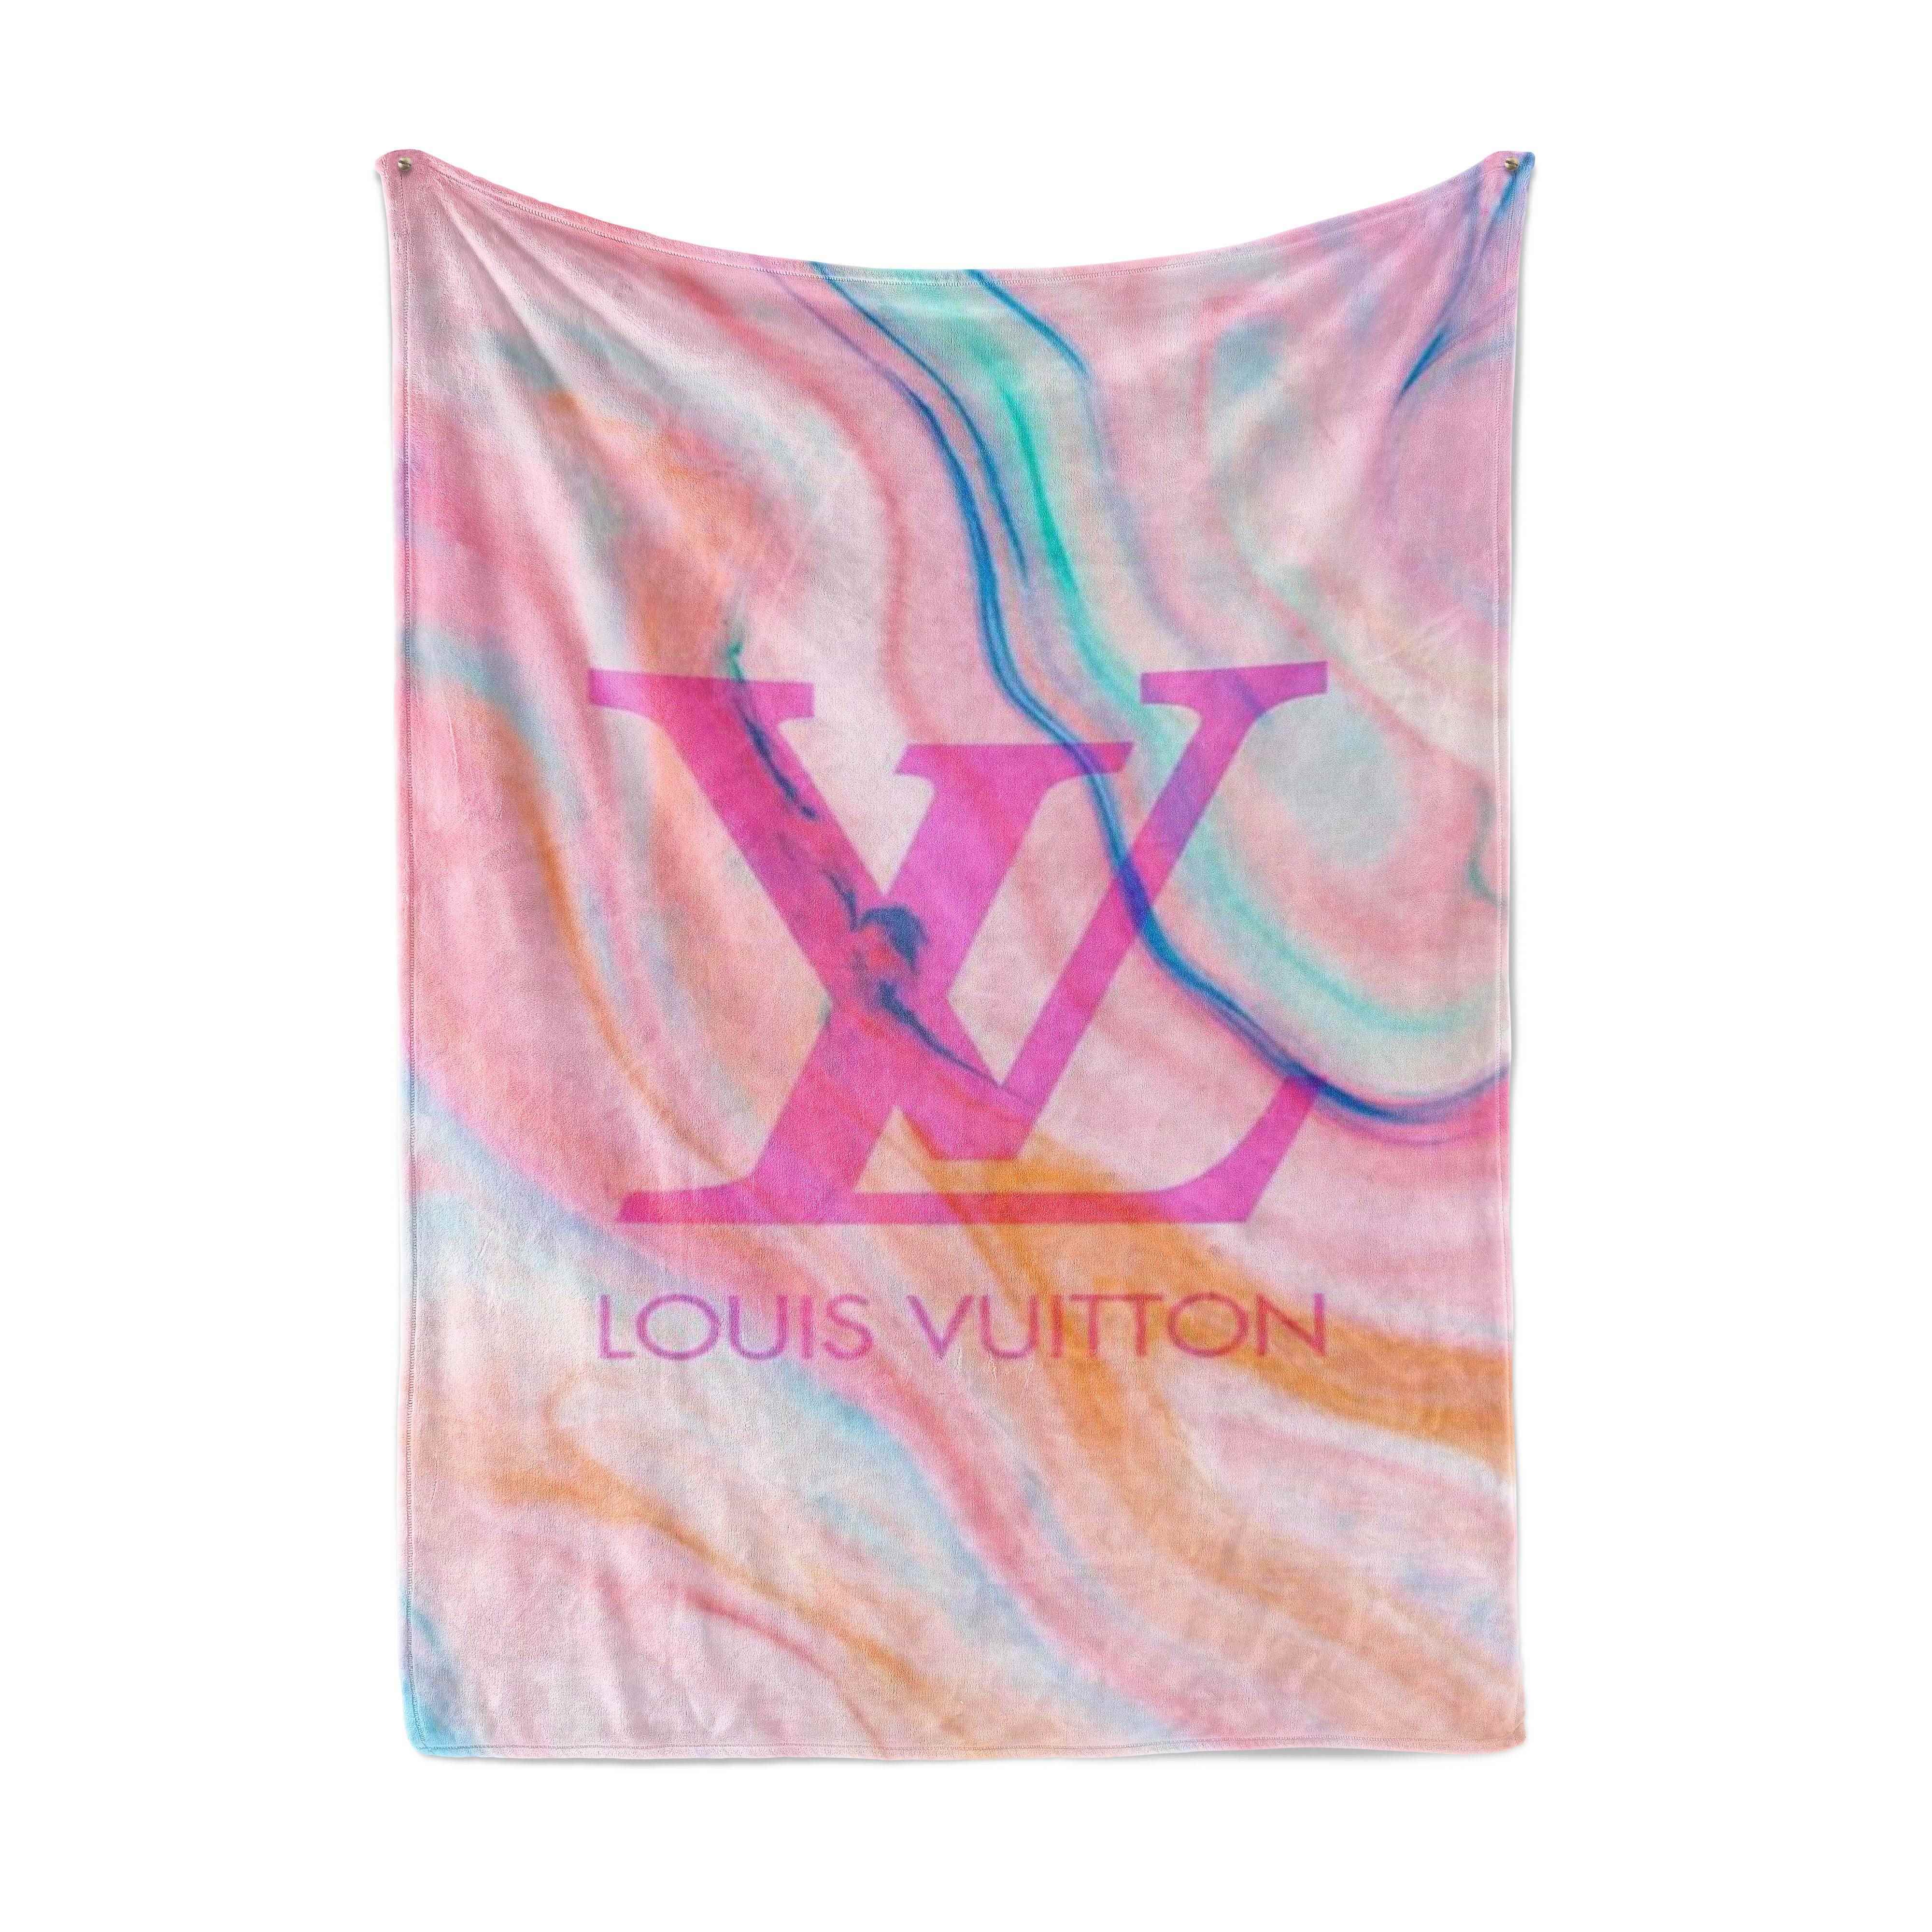 Louis Vuitton Colorful Logo Fleece Blanket Luxury Fashion Brand Home Decor